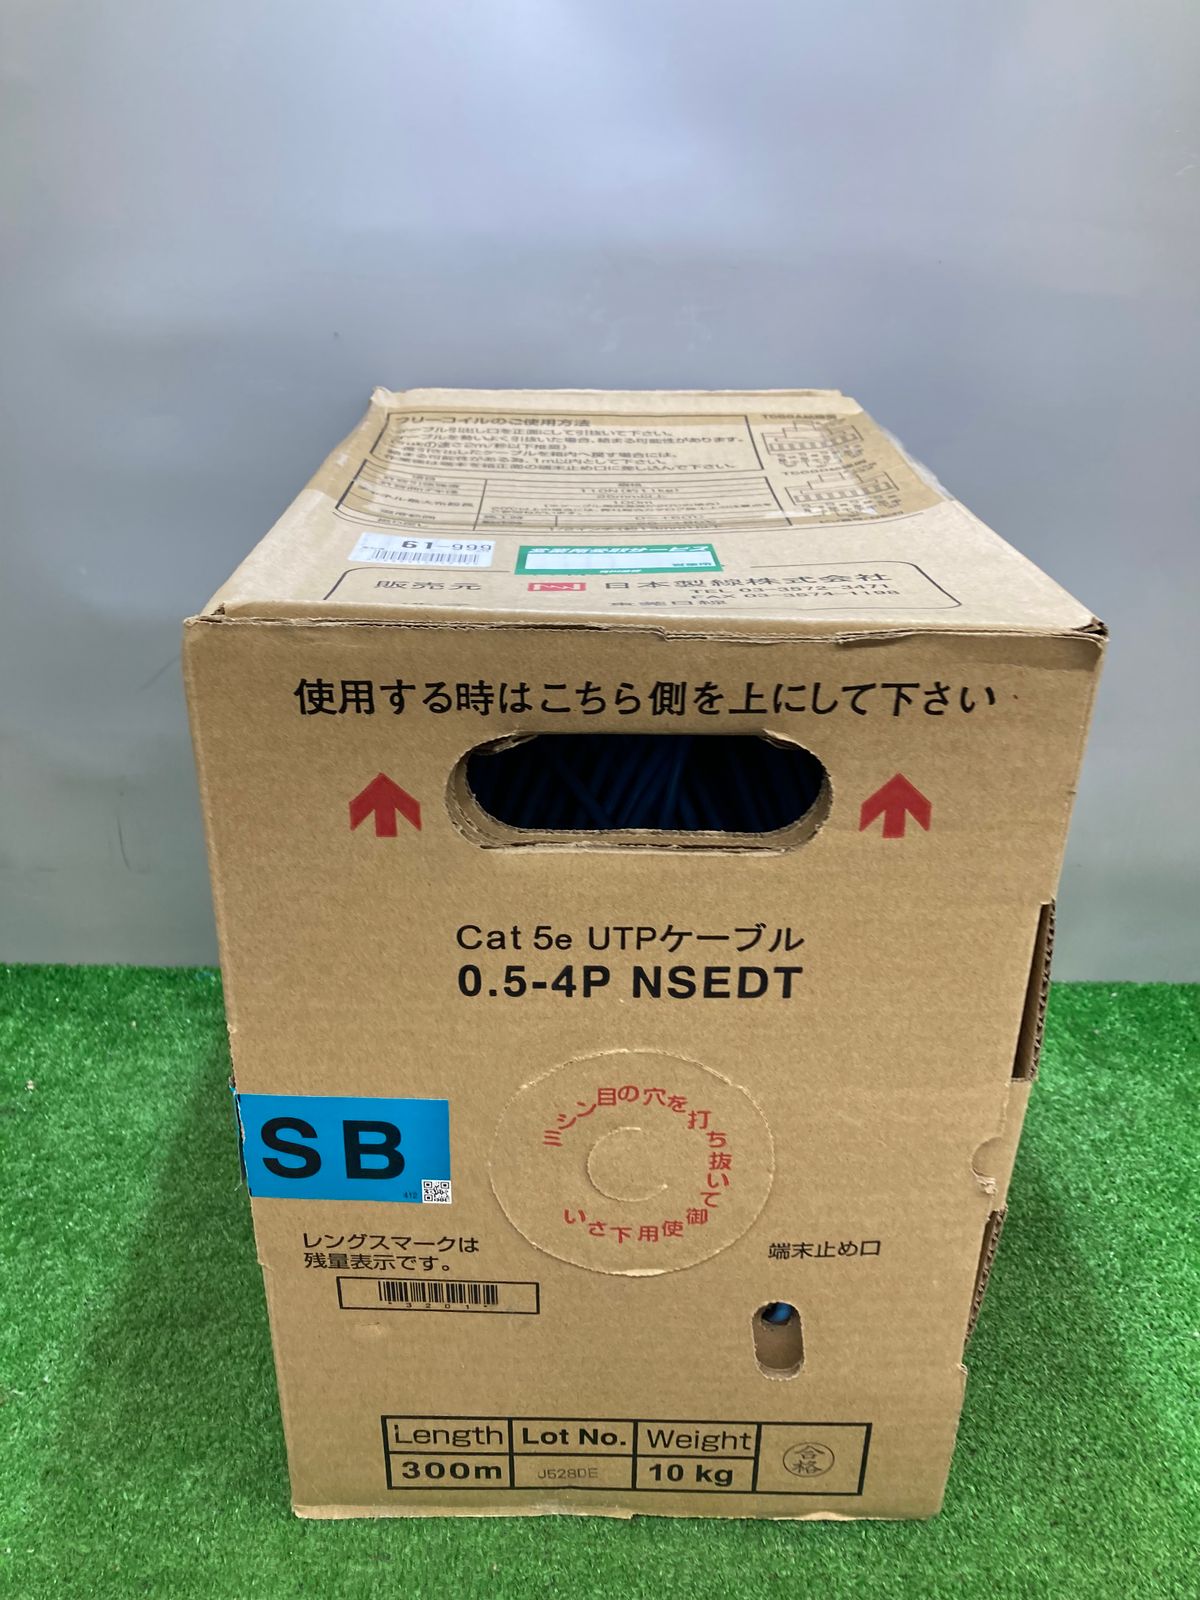 Cat5e UTP 日本製線 (SB) 2箱-